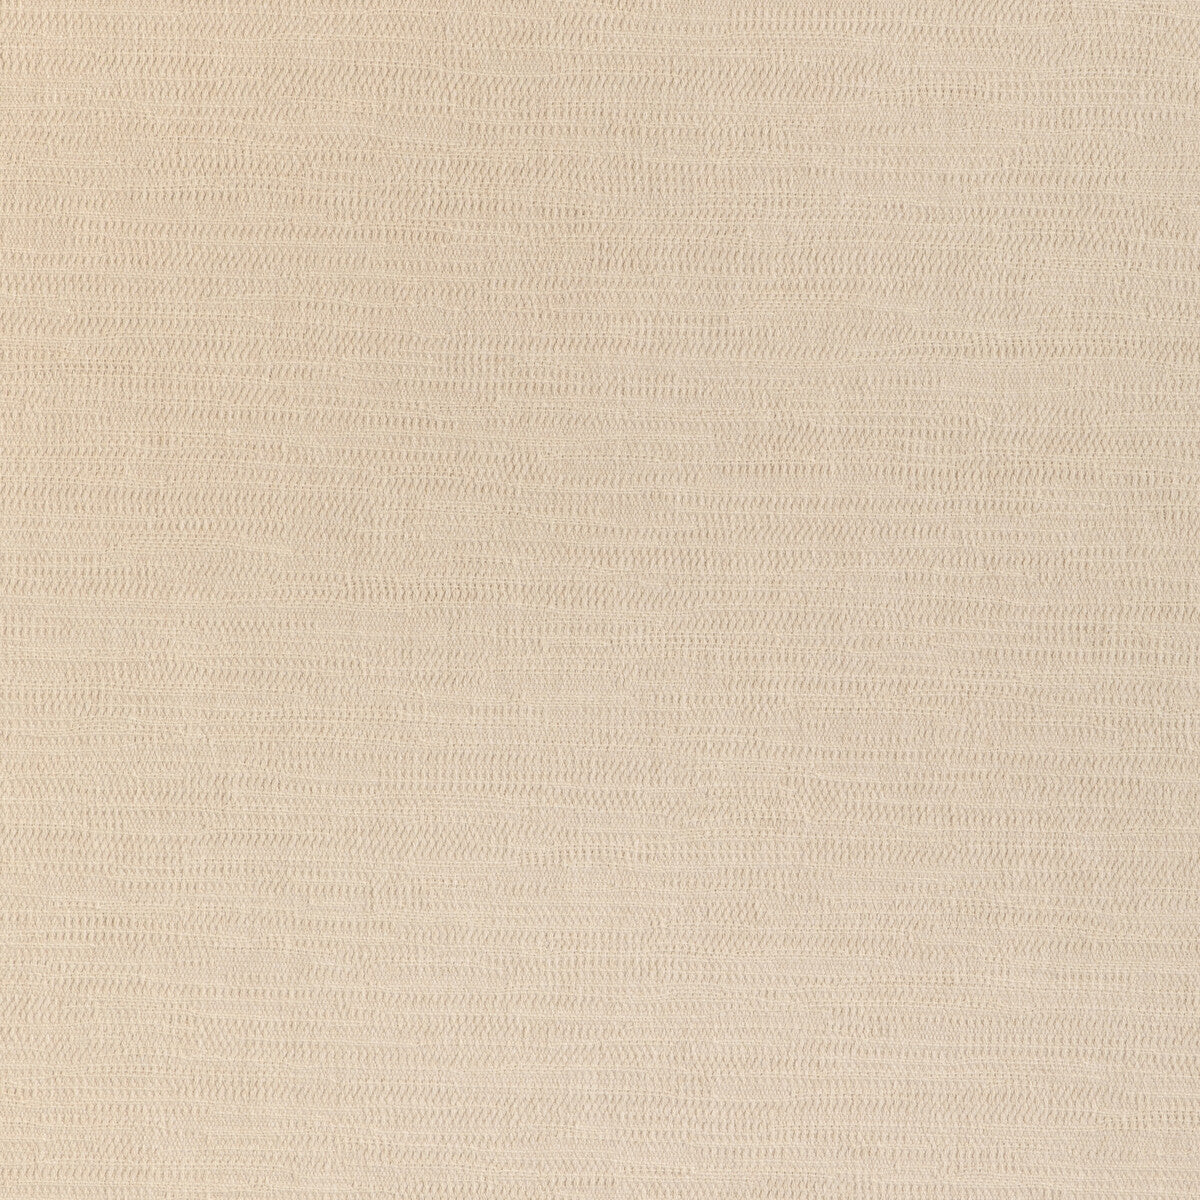 La Mer Weave fabric in bone color - pattern 8024113.1.0 - by Brunschwig &amp; Fils in the Les Ensembliers L&